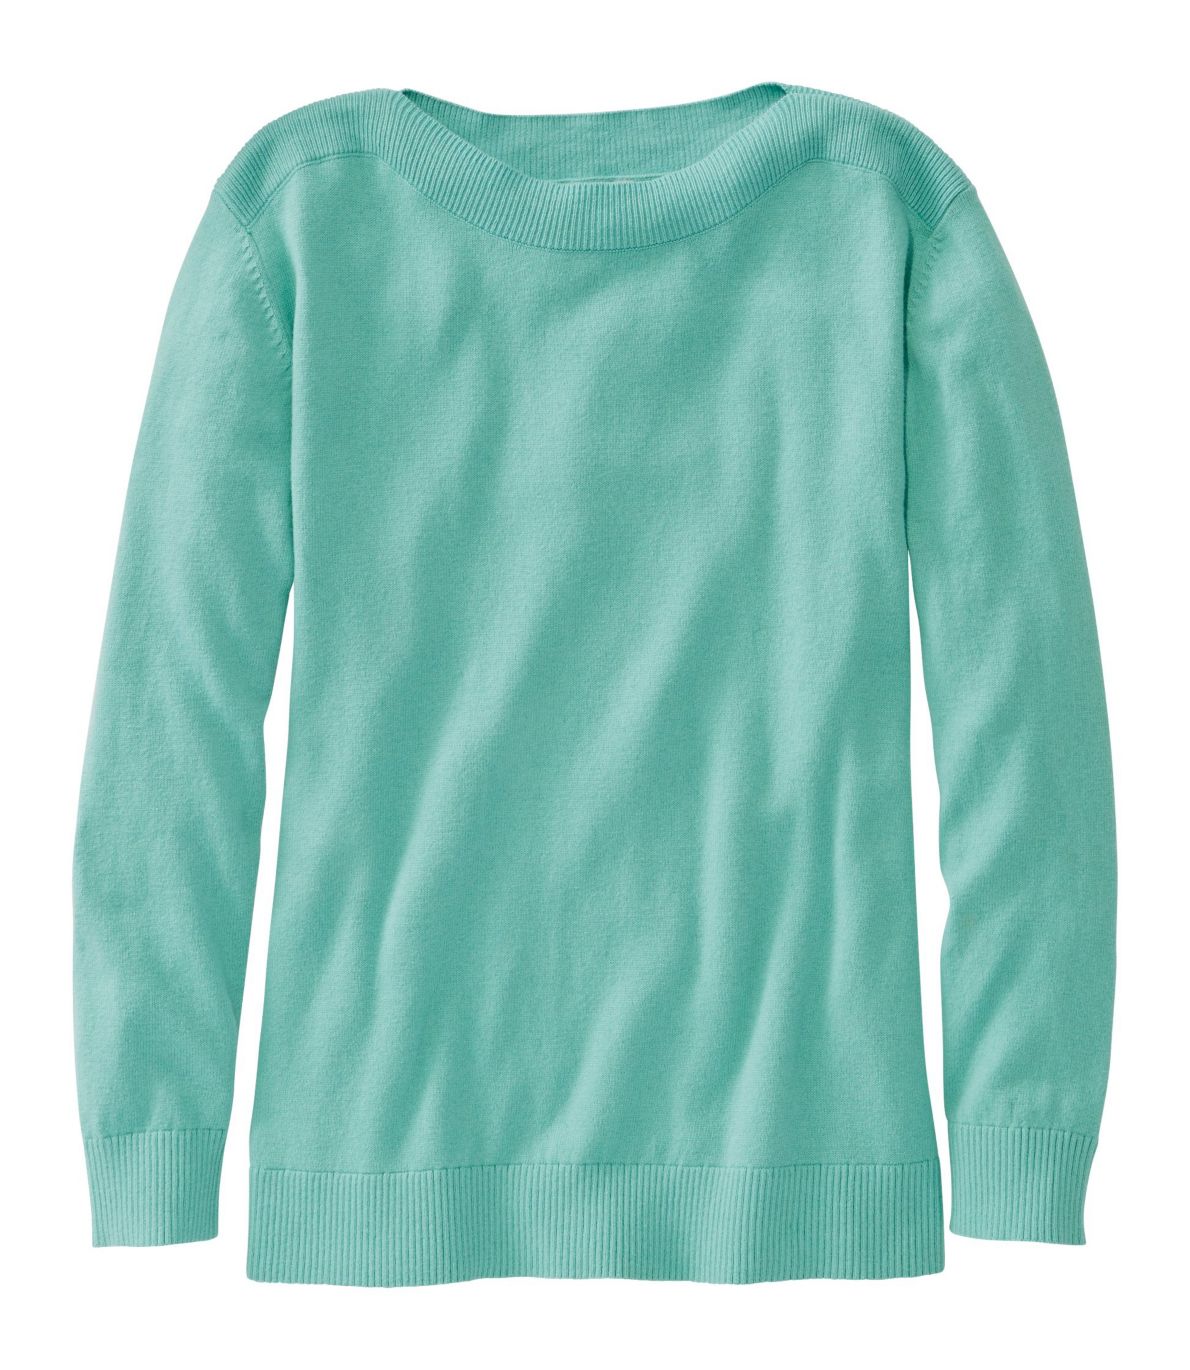 Women's Cotton/Cashmere Sweater, Boatneck